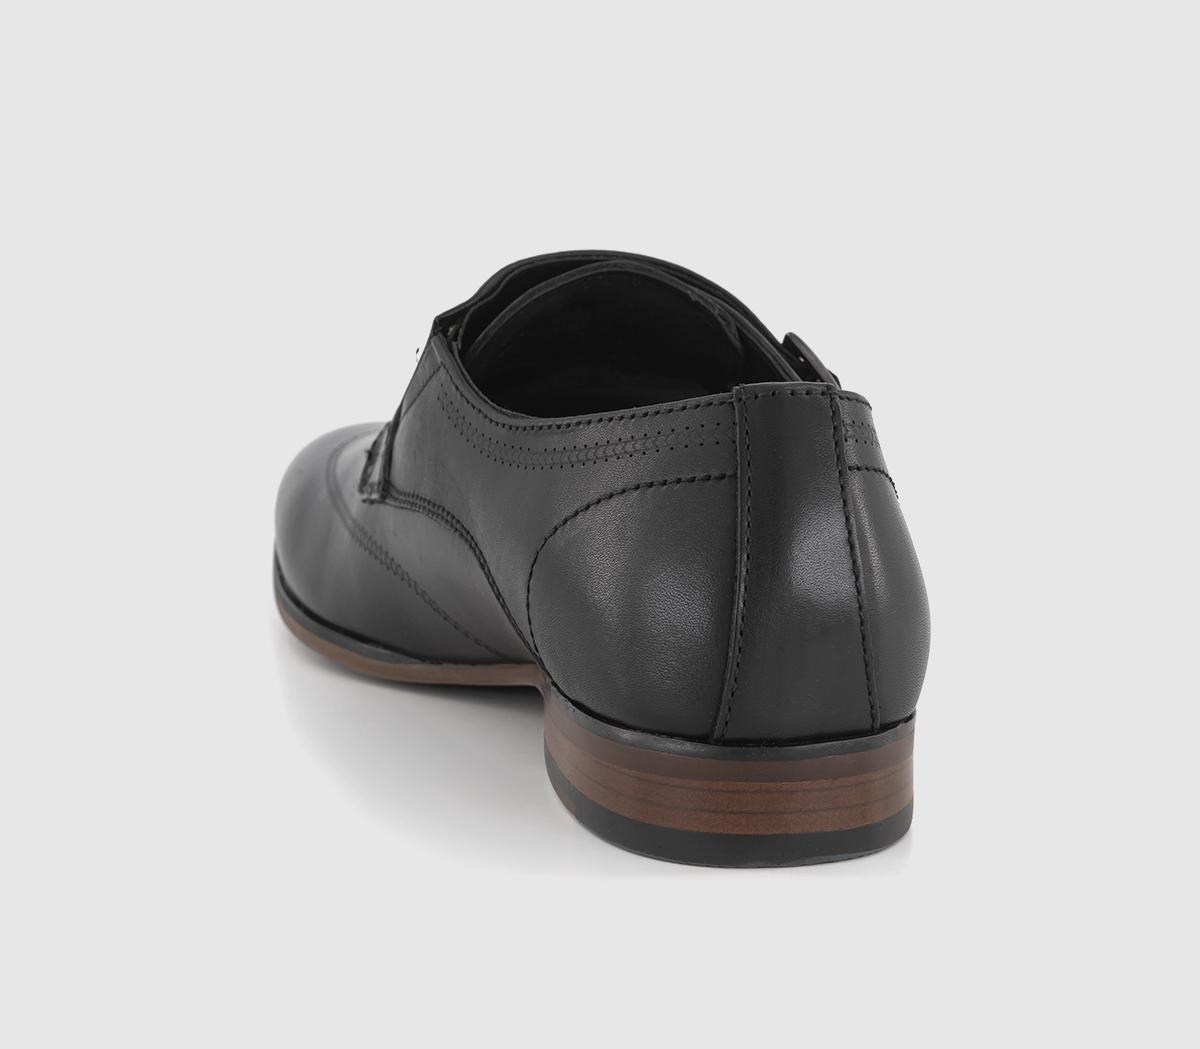 OFFICE Marseille Leather Double Strap Monk Shoes Black Leather - Men’s ...